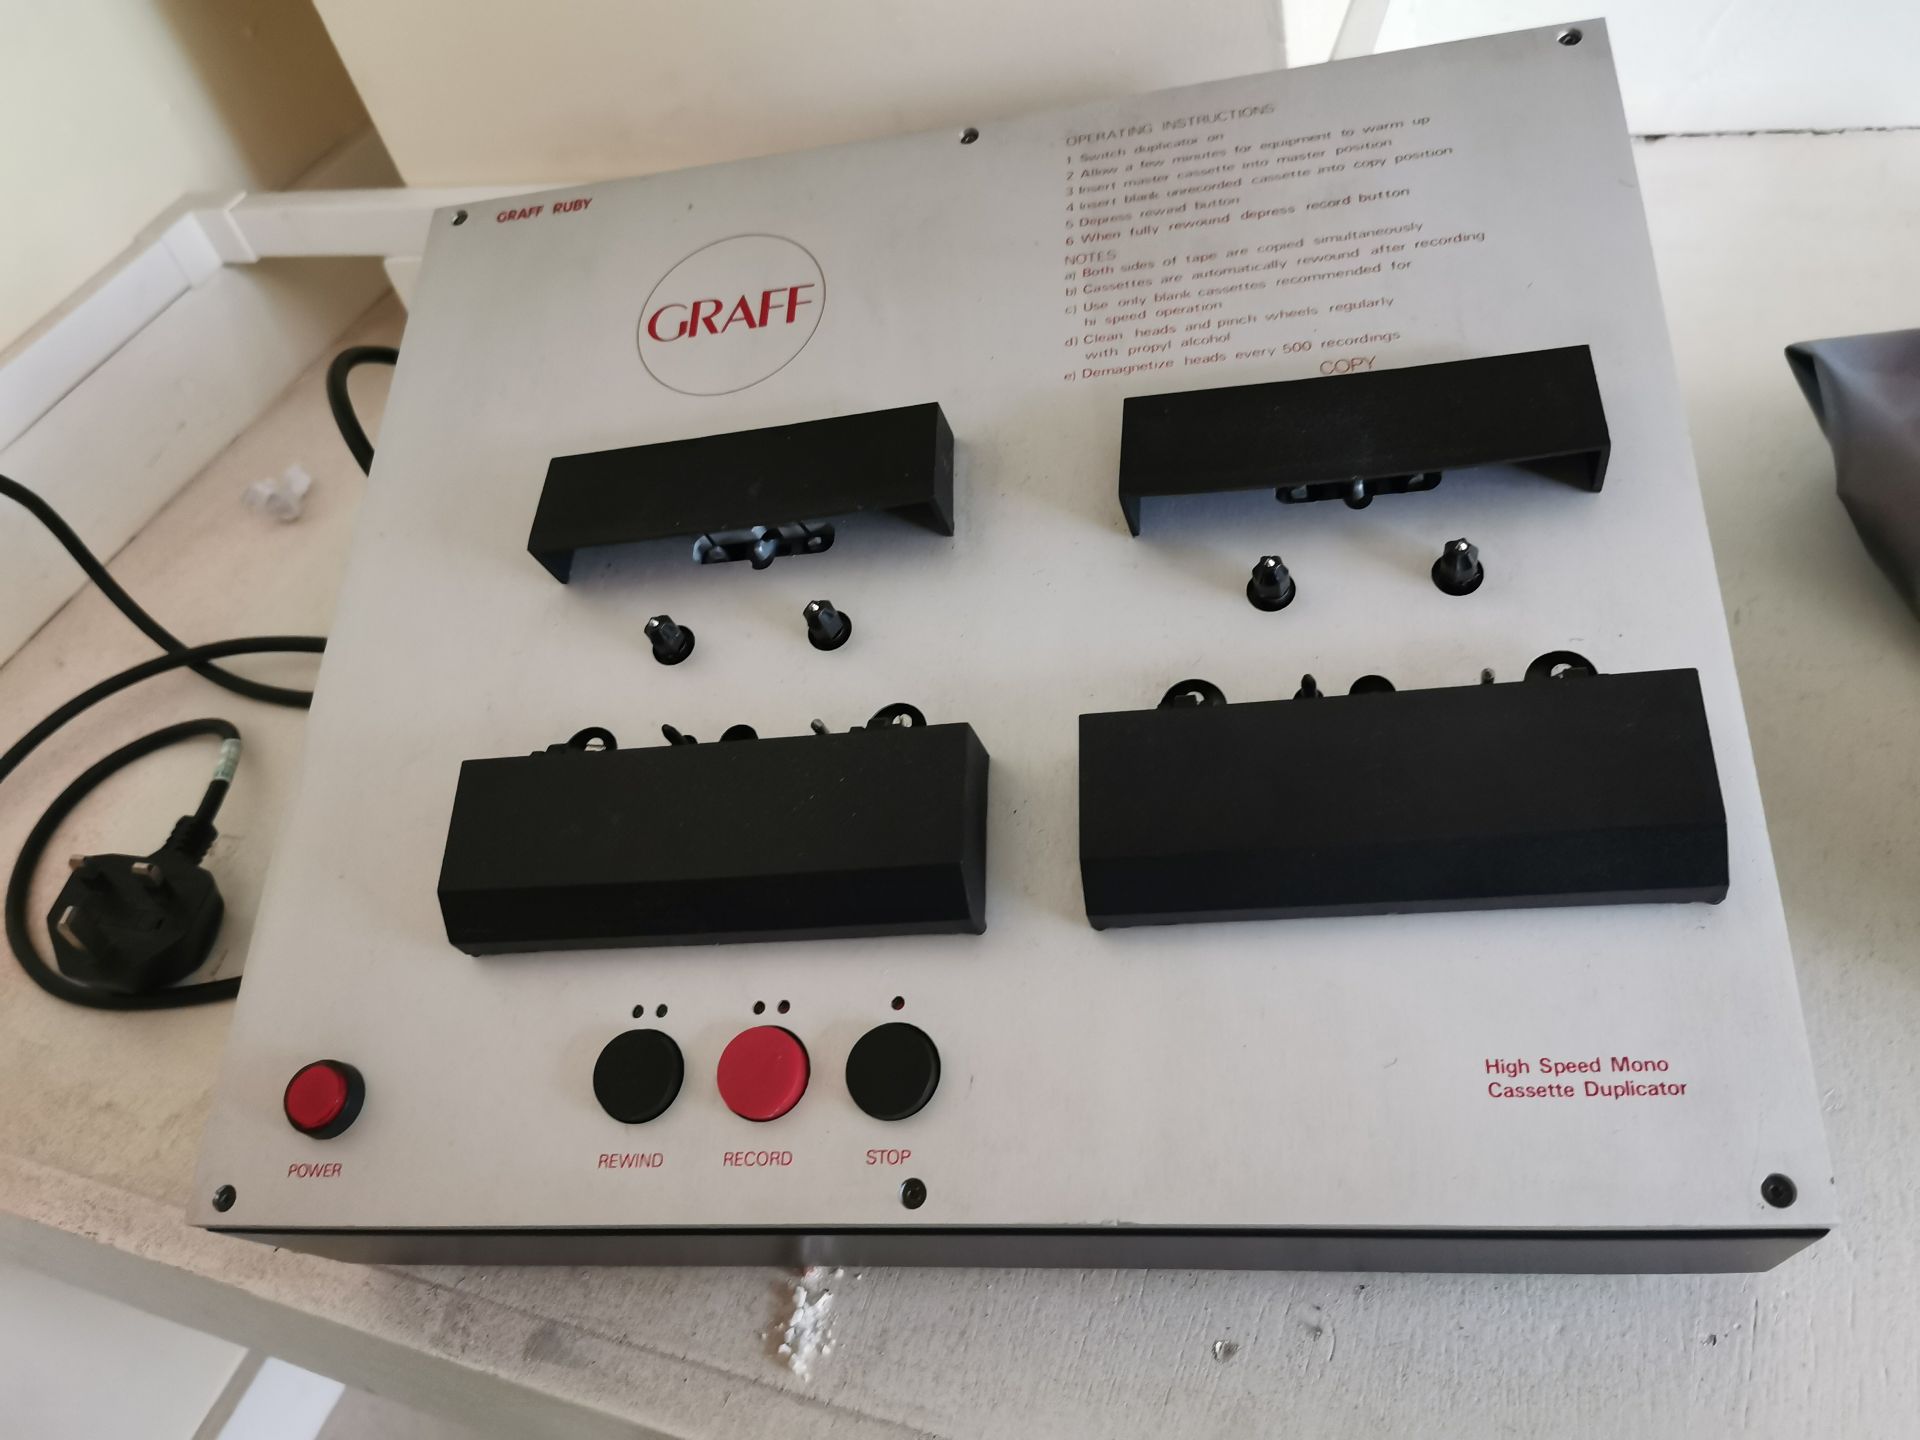 Graff Ruby cassette copier